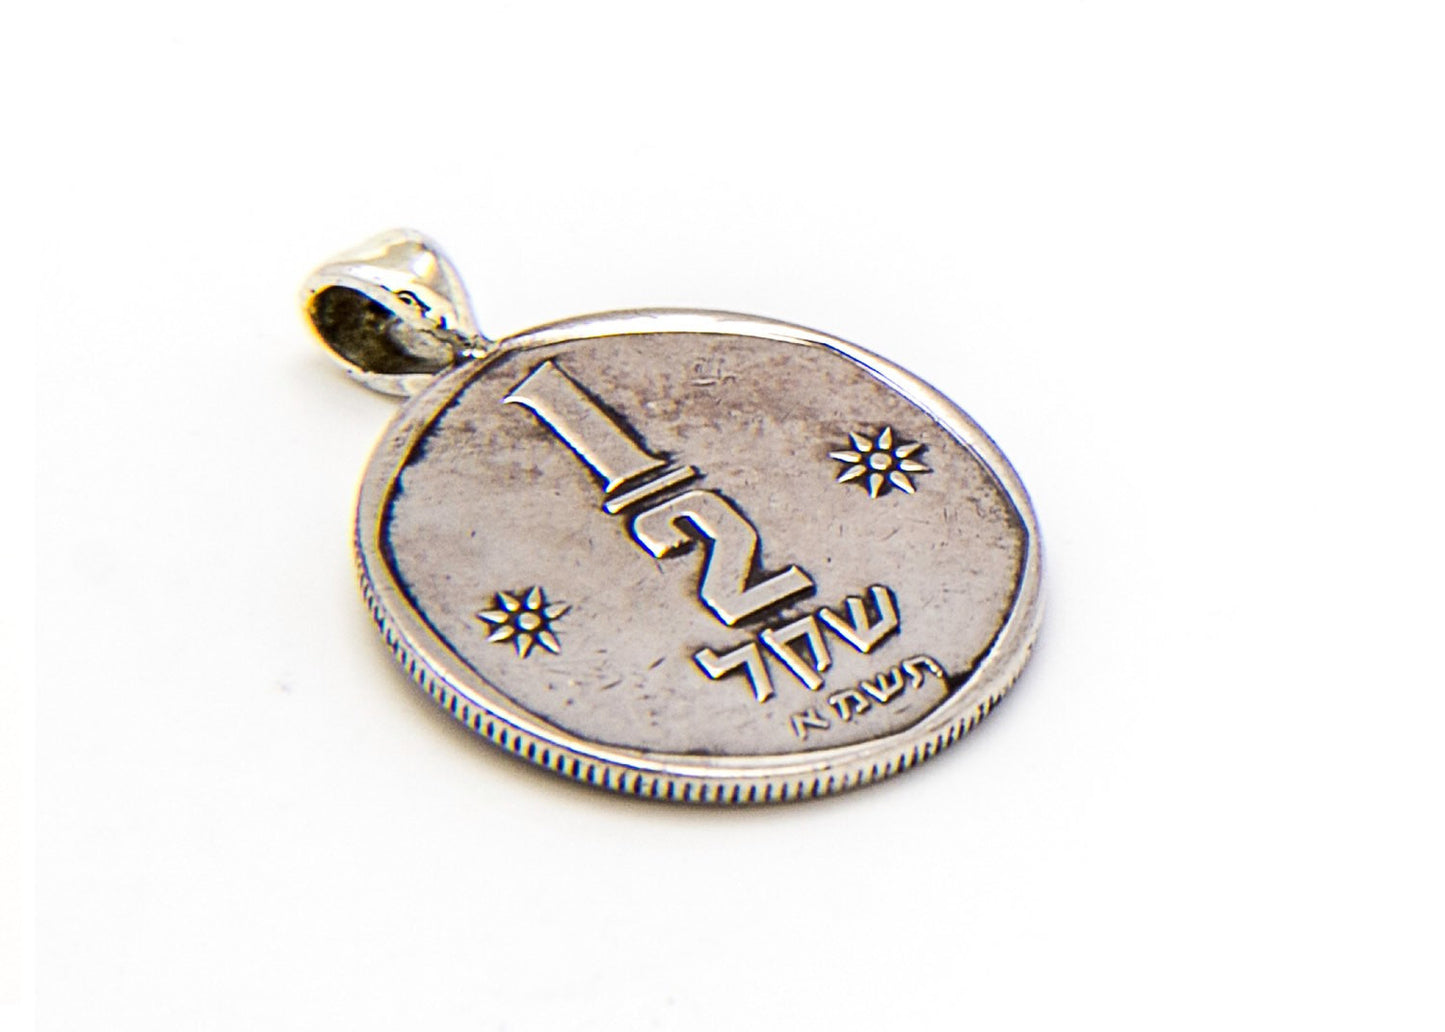 Israeli Half (1/2) Sheqel Coin Pendant Necklace